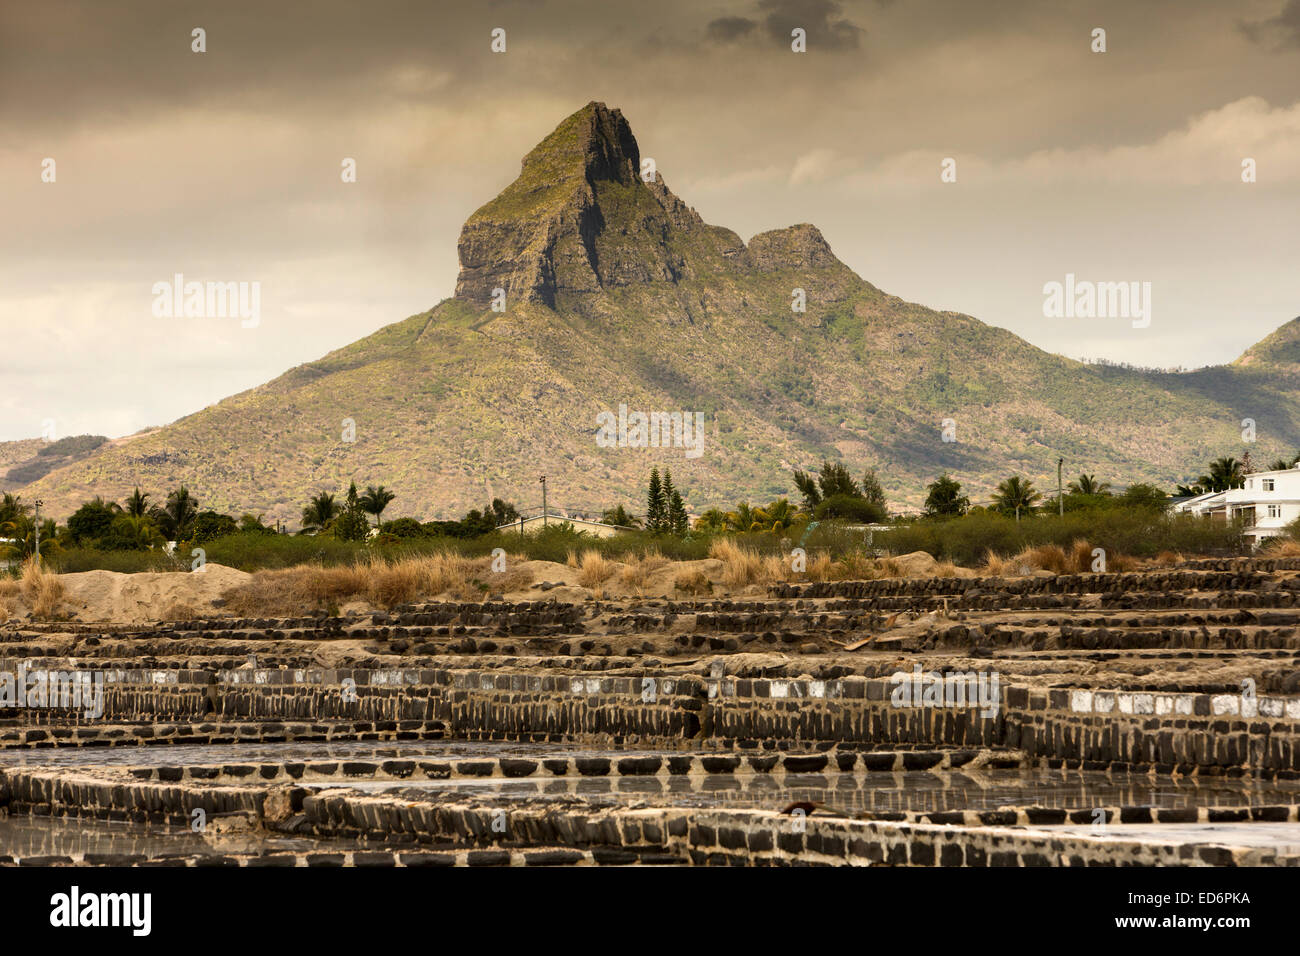 Mauritius, Tamarin, Montagne du Rempart behind salt pans Stock Photo